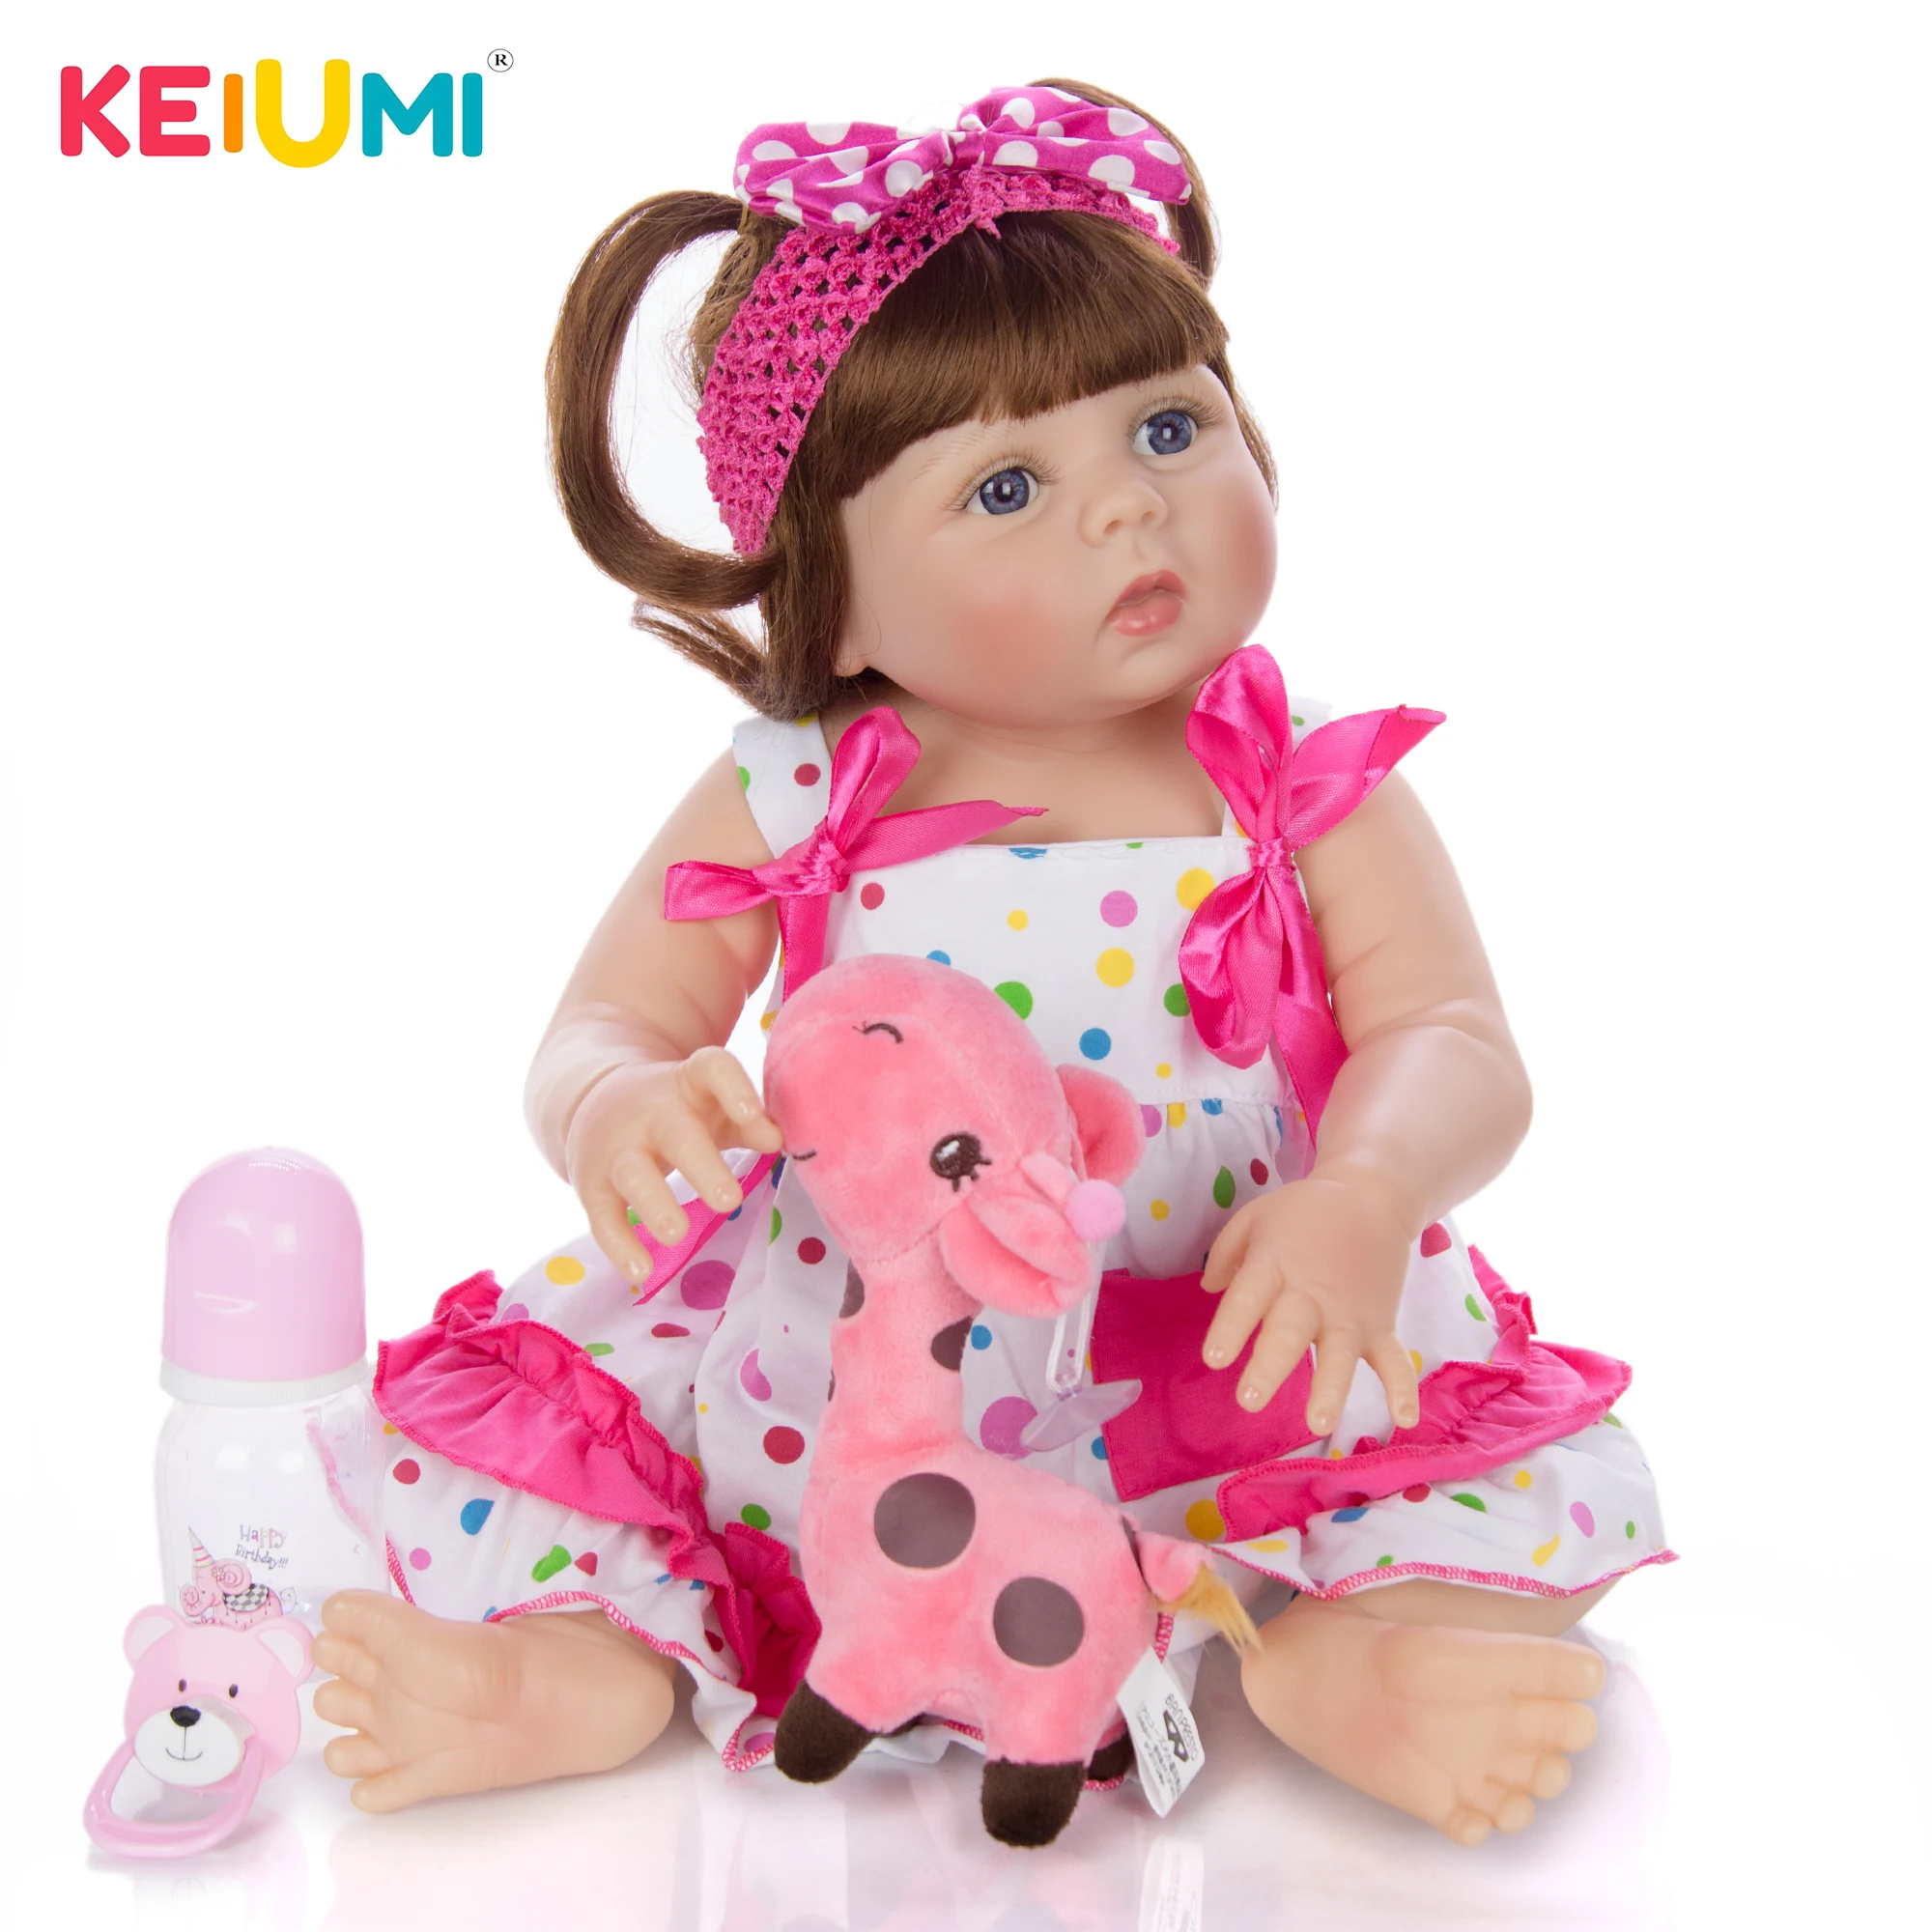 

KEIUMI Cute Silicone Vinyl Reborn Baby Dolls 57 cm Lifelike Reborn Girl Menina Dolls Play game Toys For Children Birthday Gifts